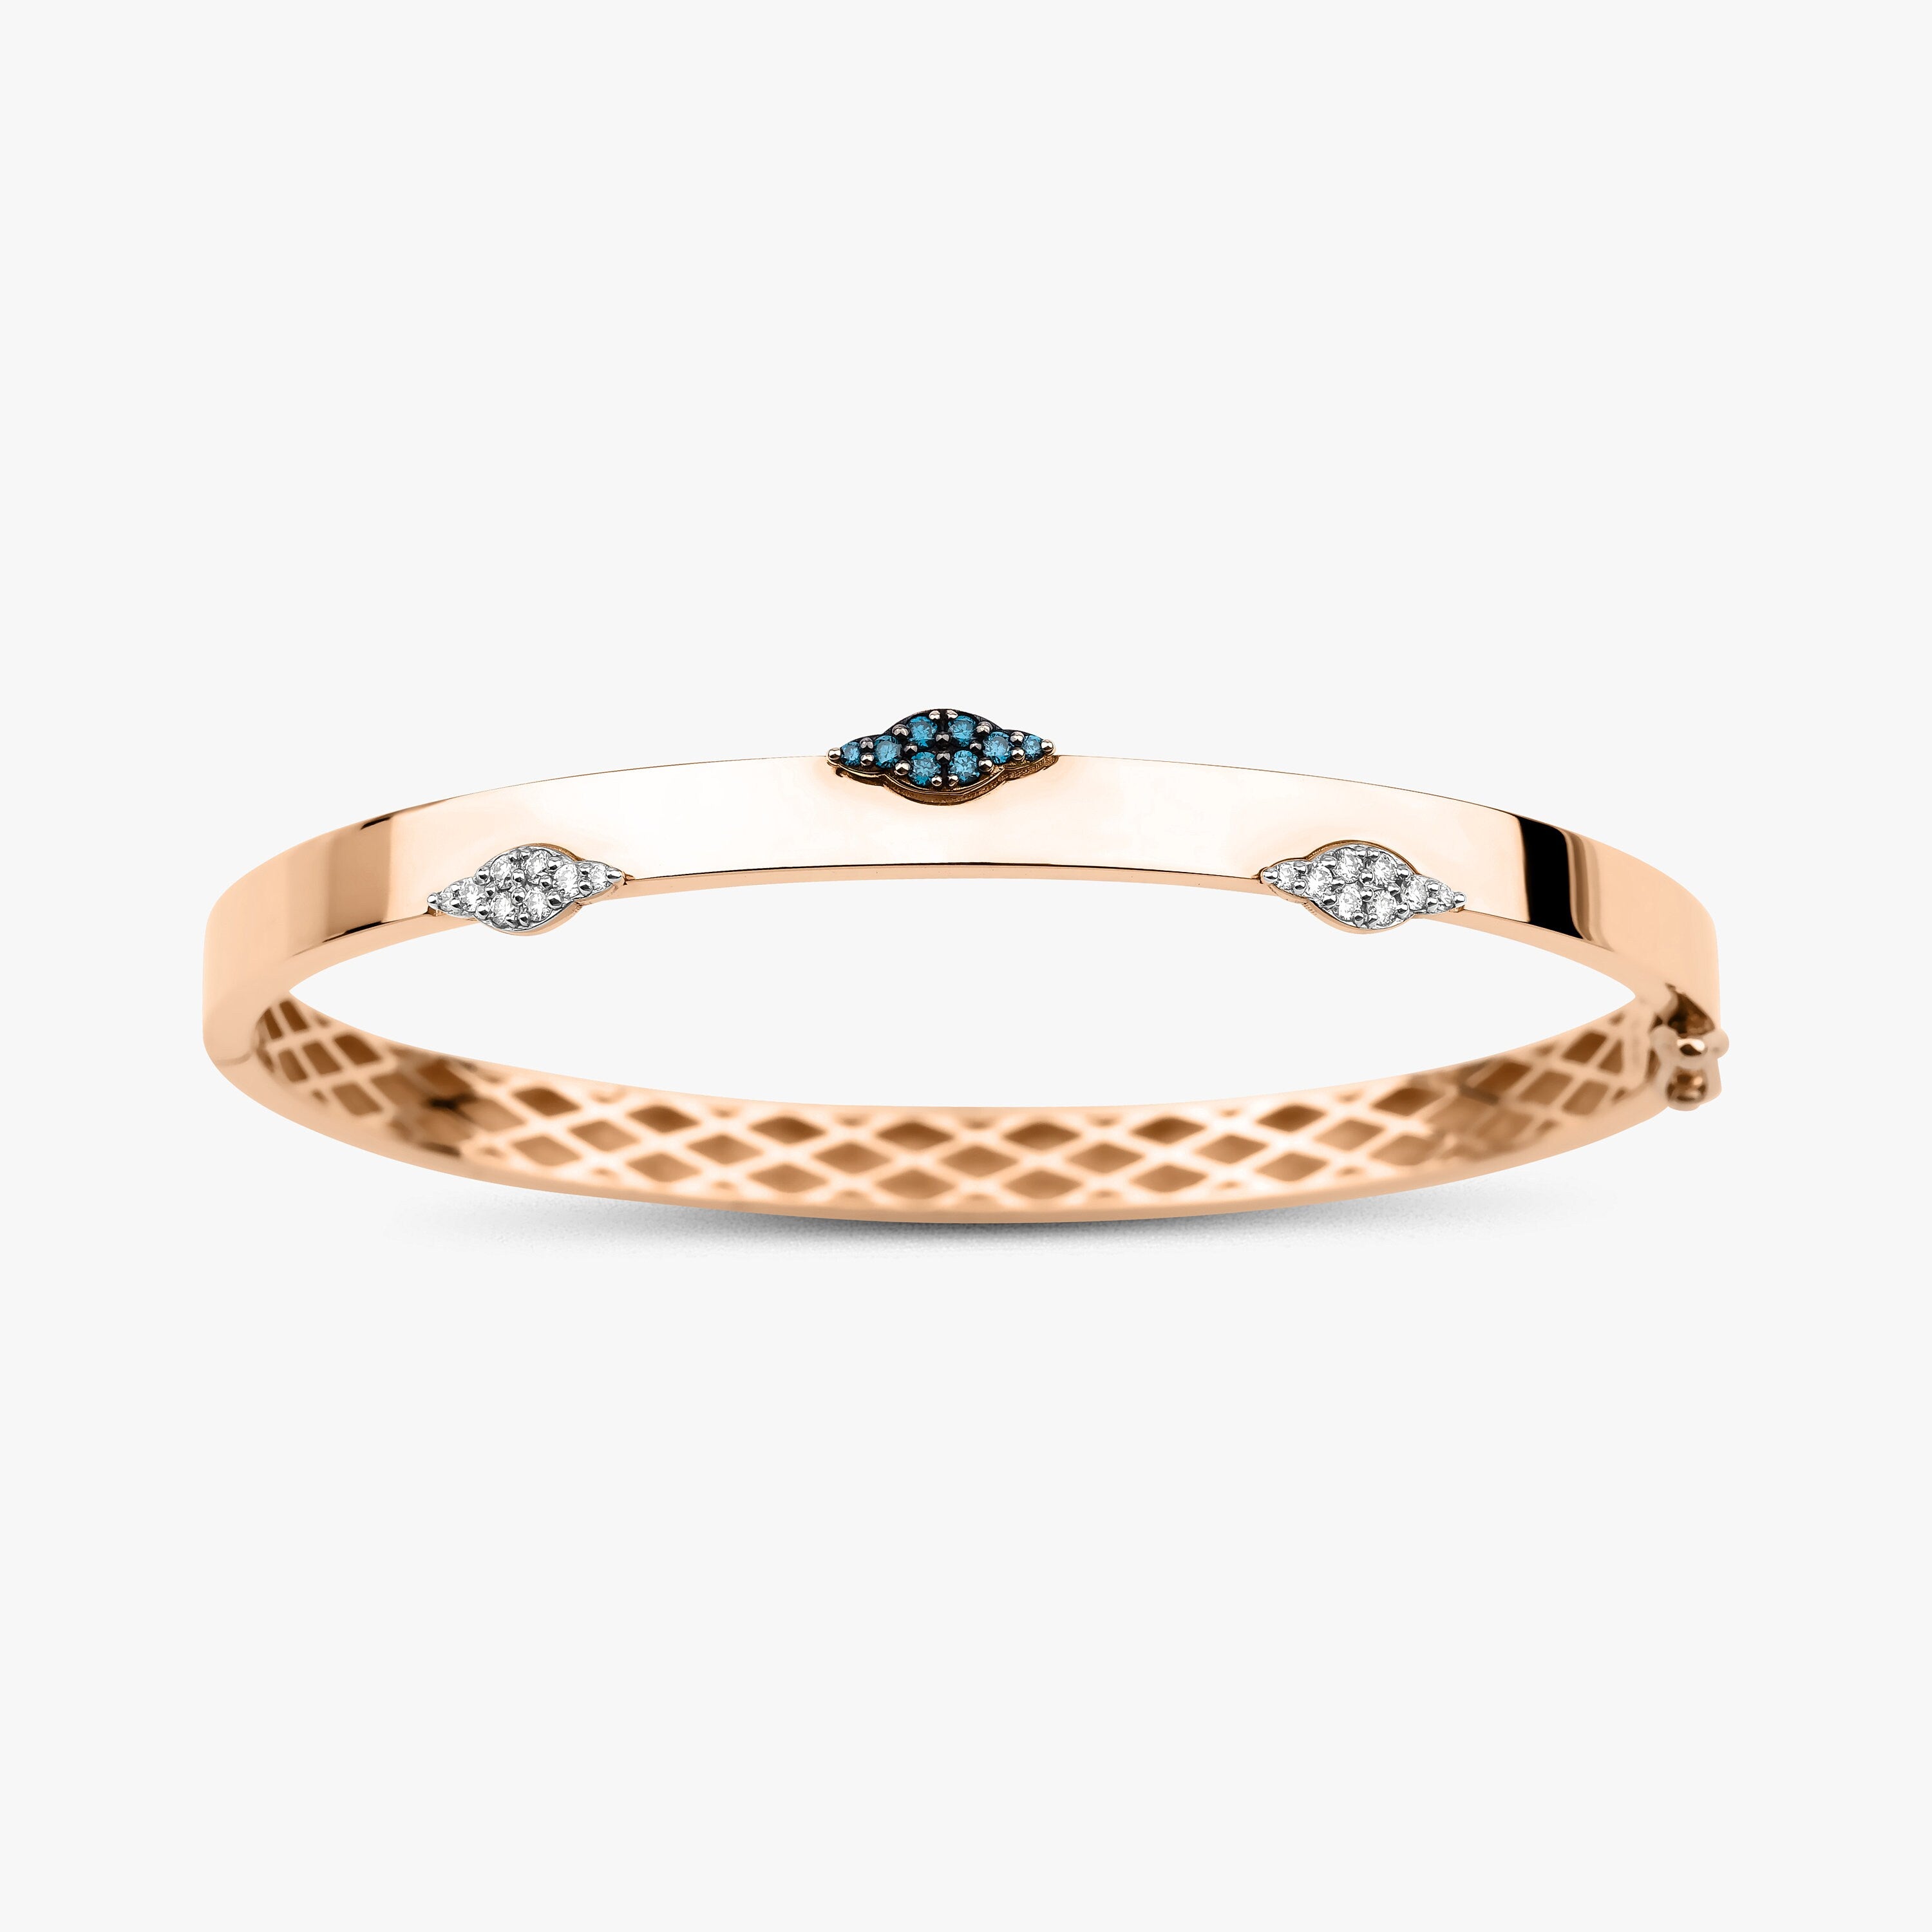 White and Blue Diamond Bangle Bracelet in 14K Gold